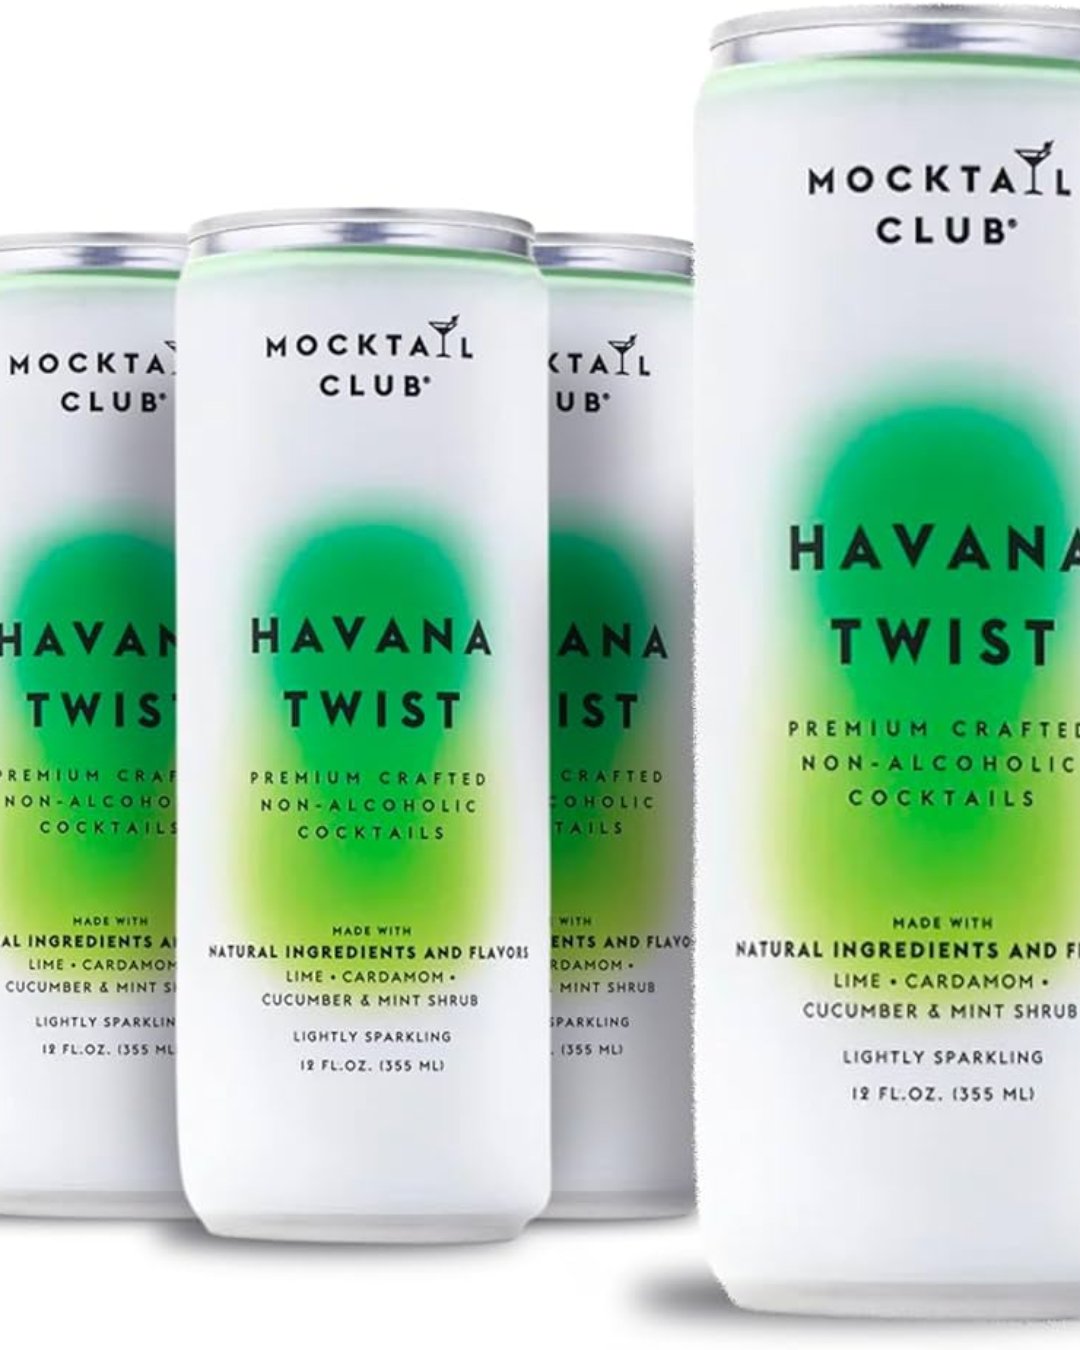 Mocktail Club: Havana Twist - The Village Retail